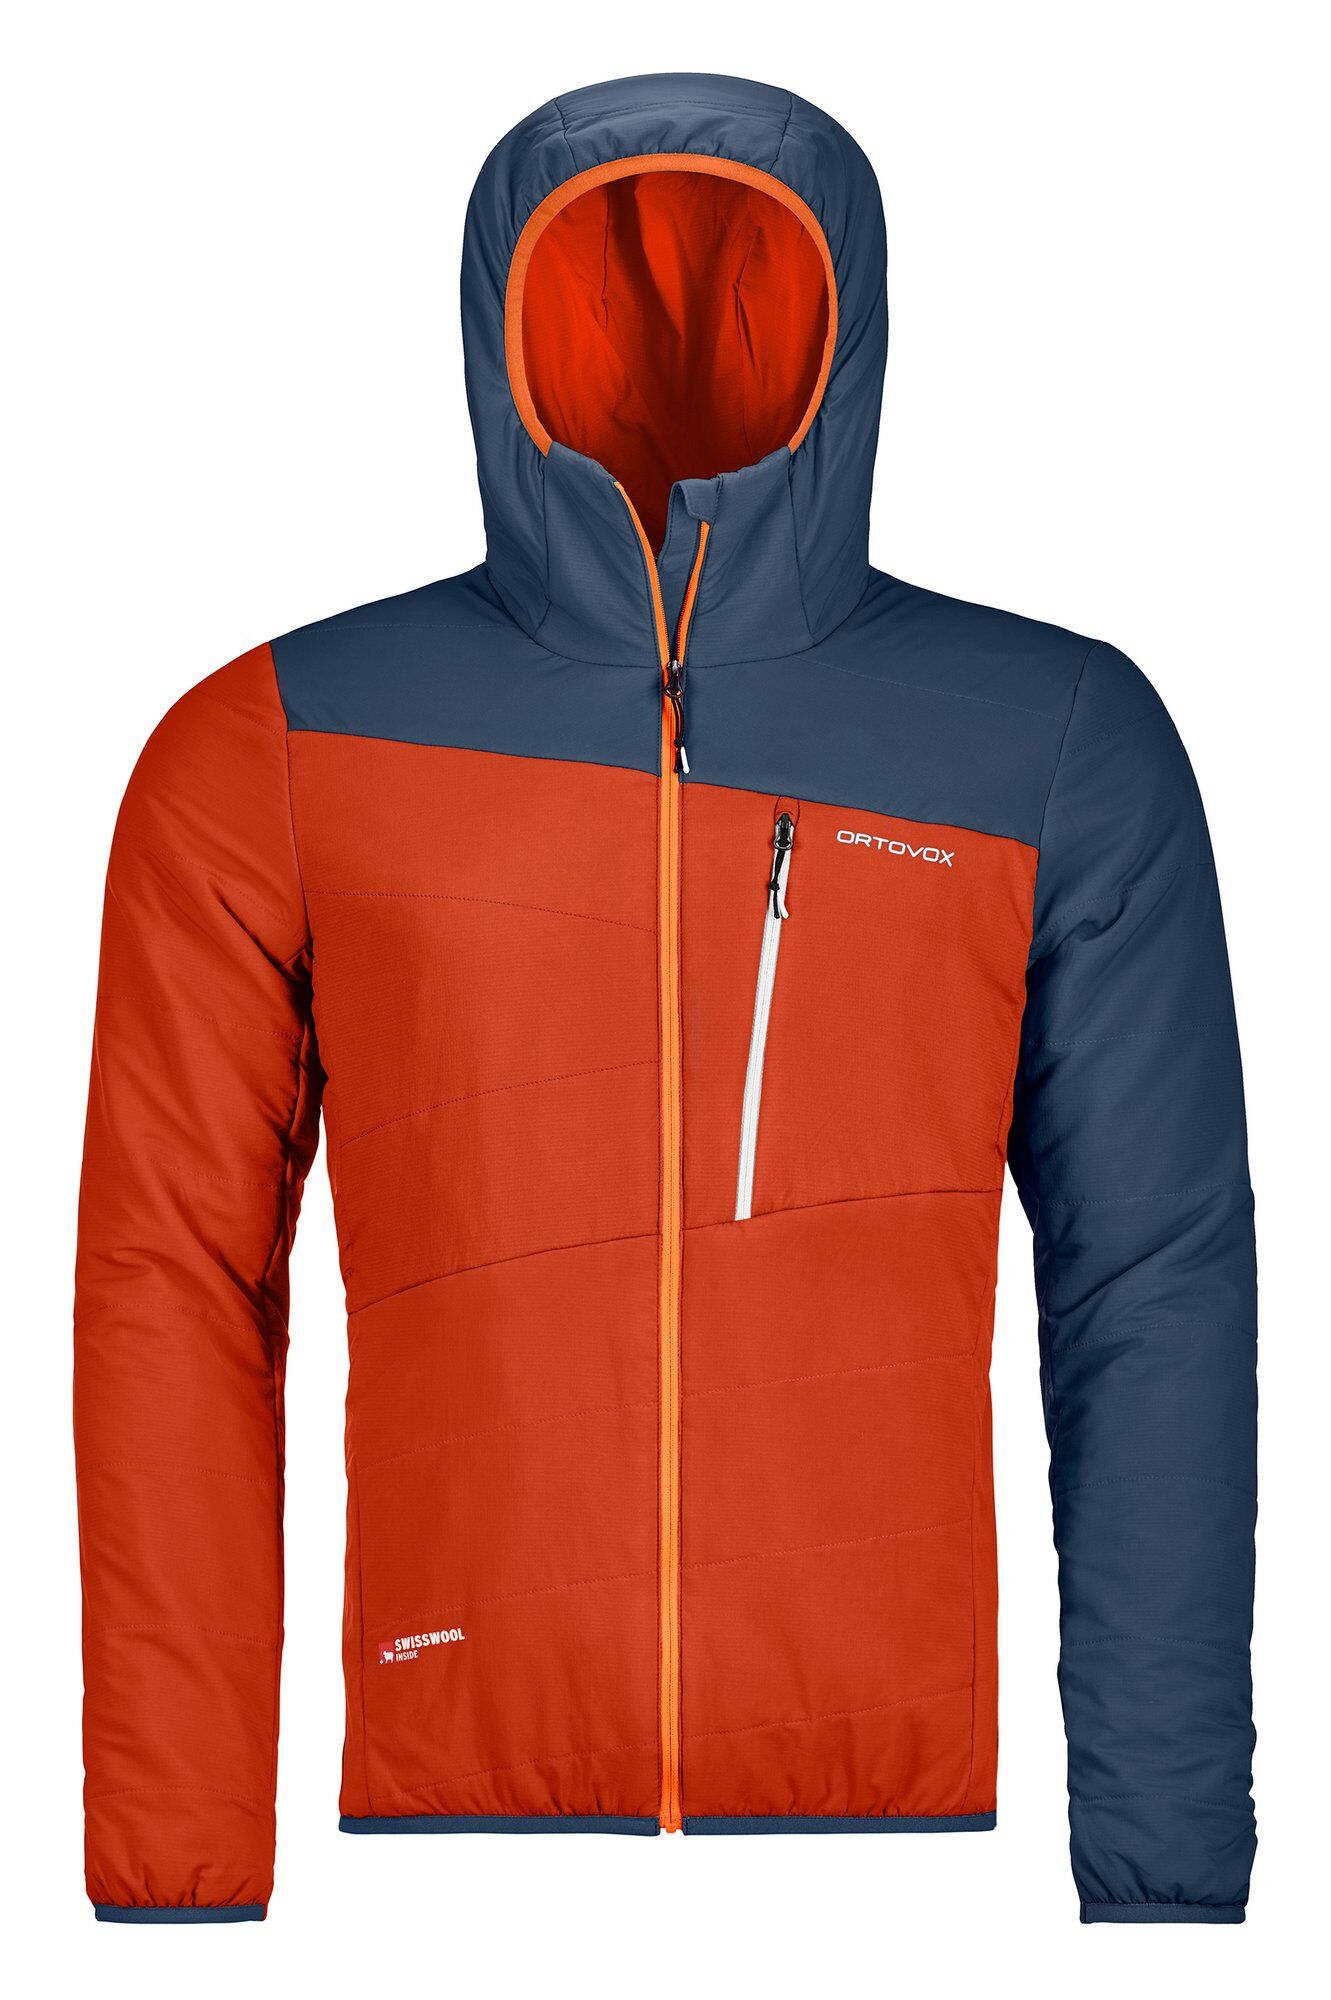 Ortovox Swisswool Zebru Jacket - Wool jacket - Men's